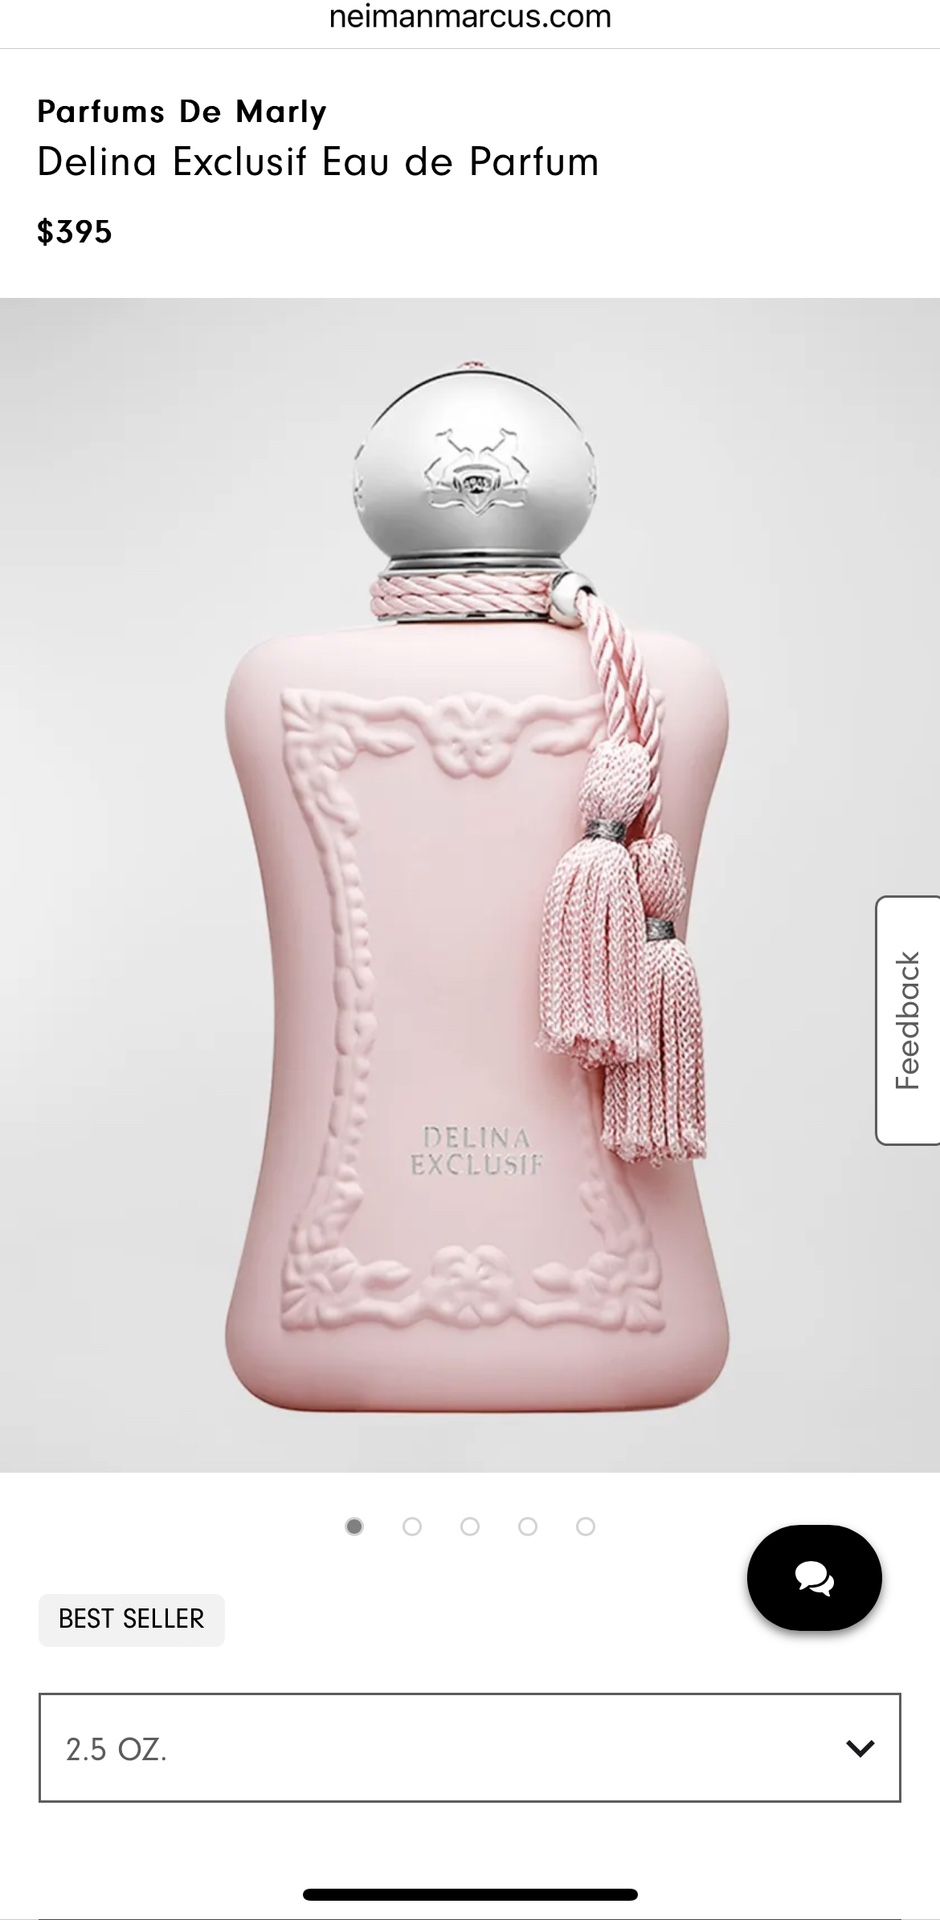 Delink Exclusif Perfume New